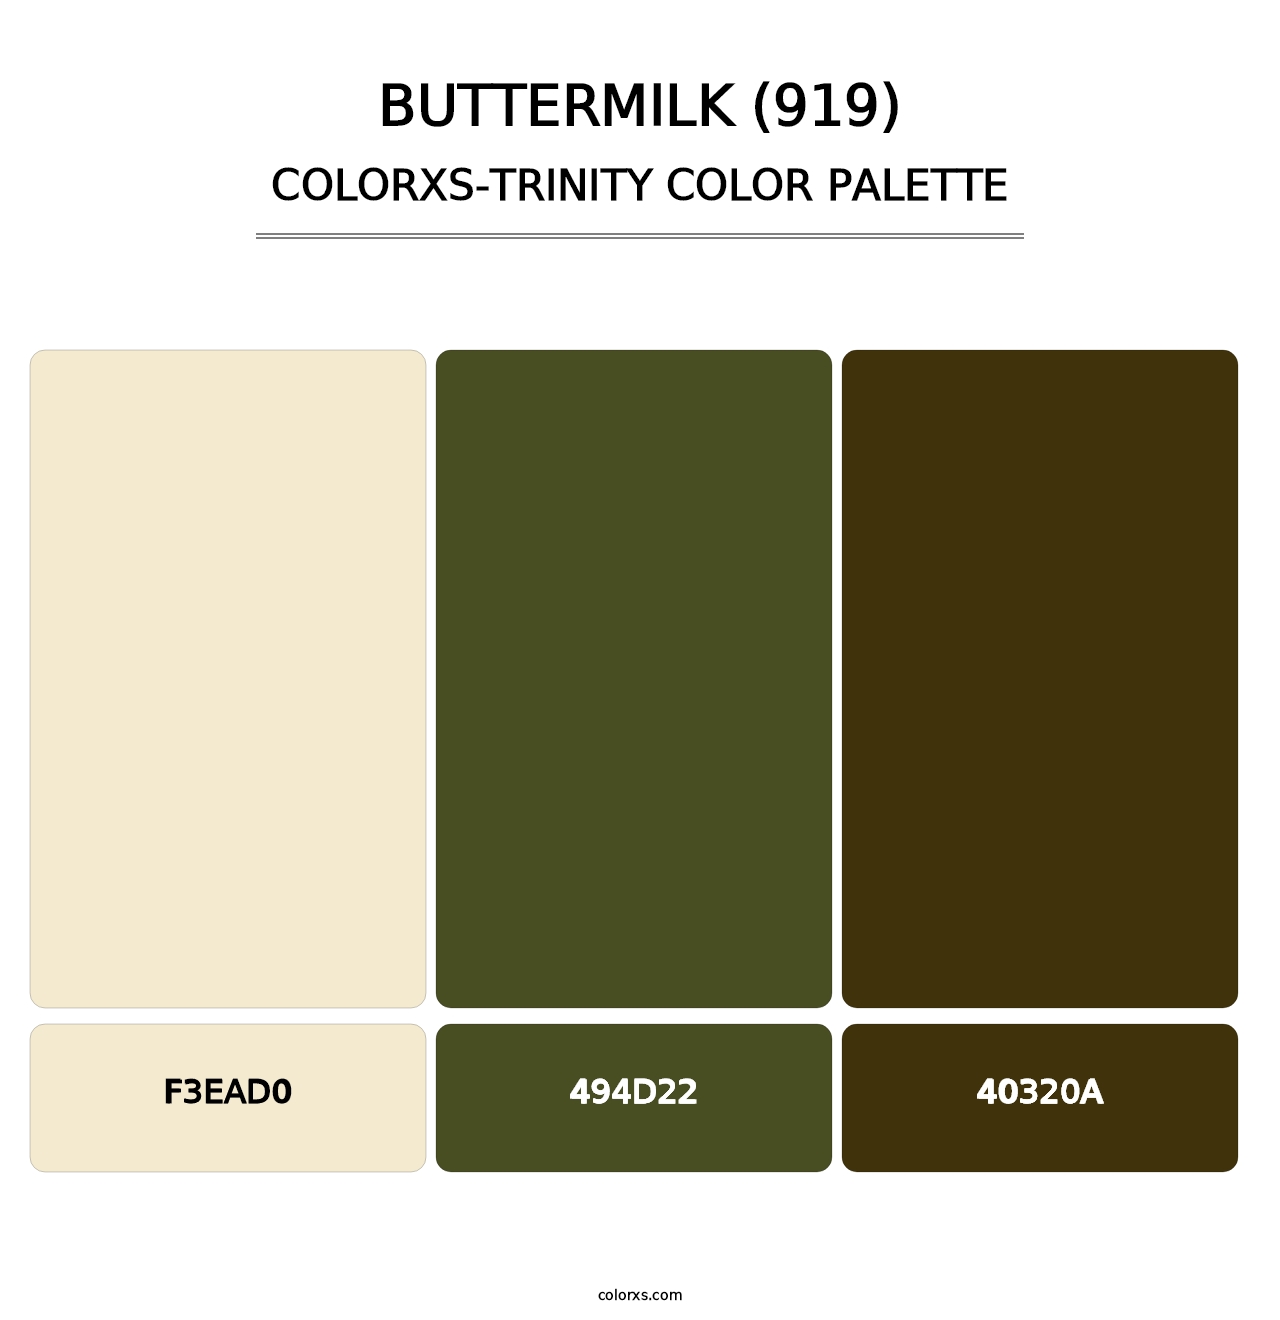 Buttermilk (919) - Colorxs Trinity Palette